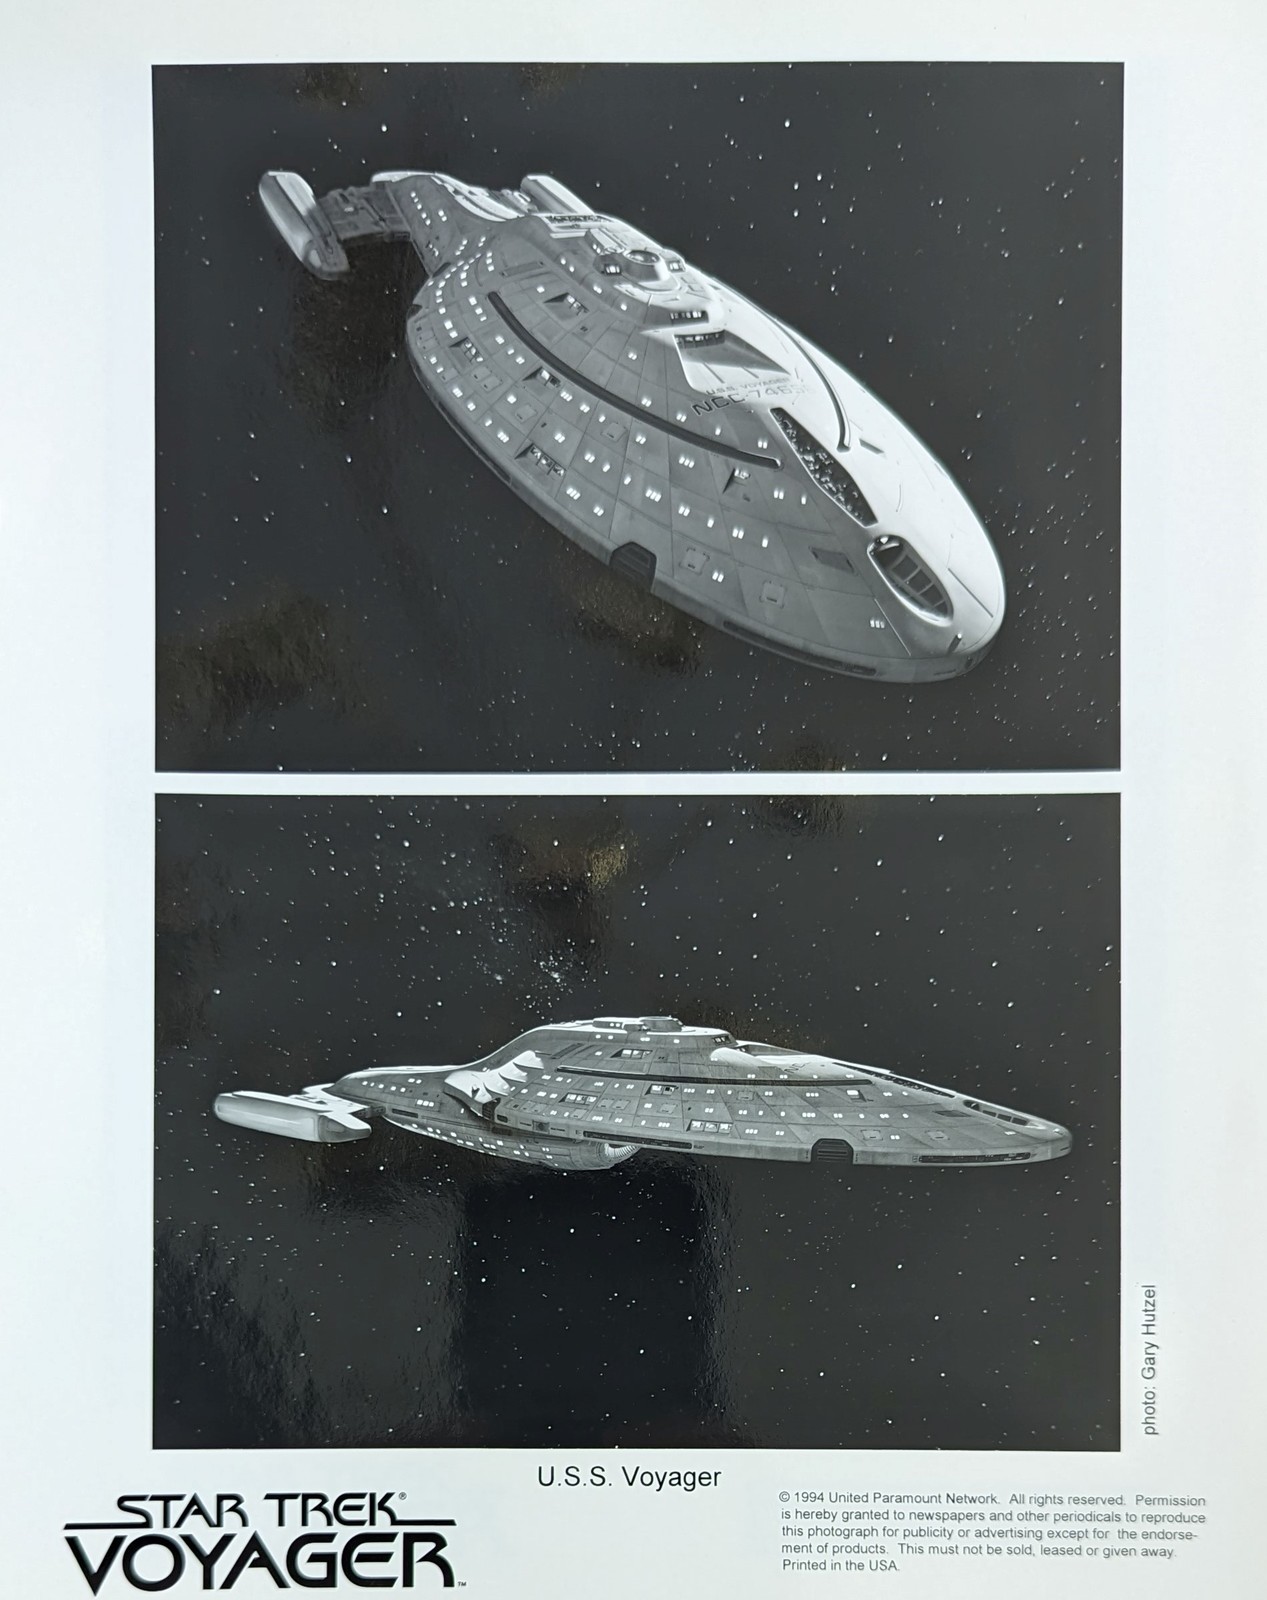 Primary image for Star Trek Voyager U.S.S. Voyager 10x8 1994 Original Press Photo 